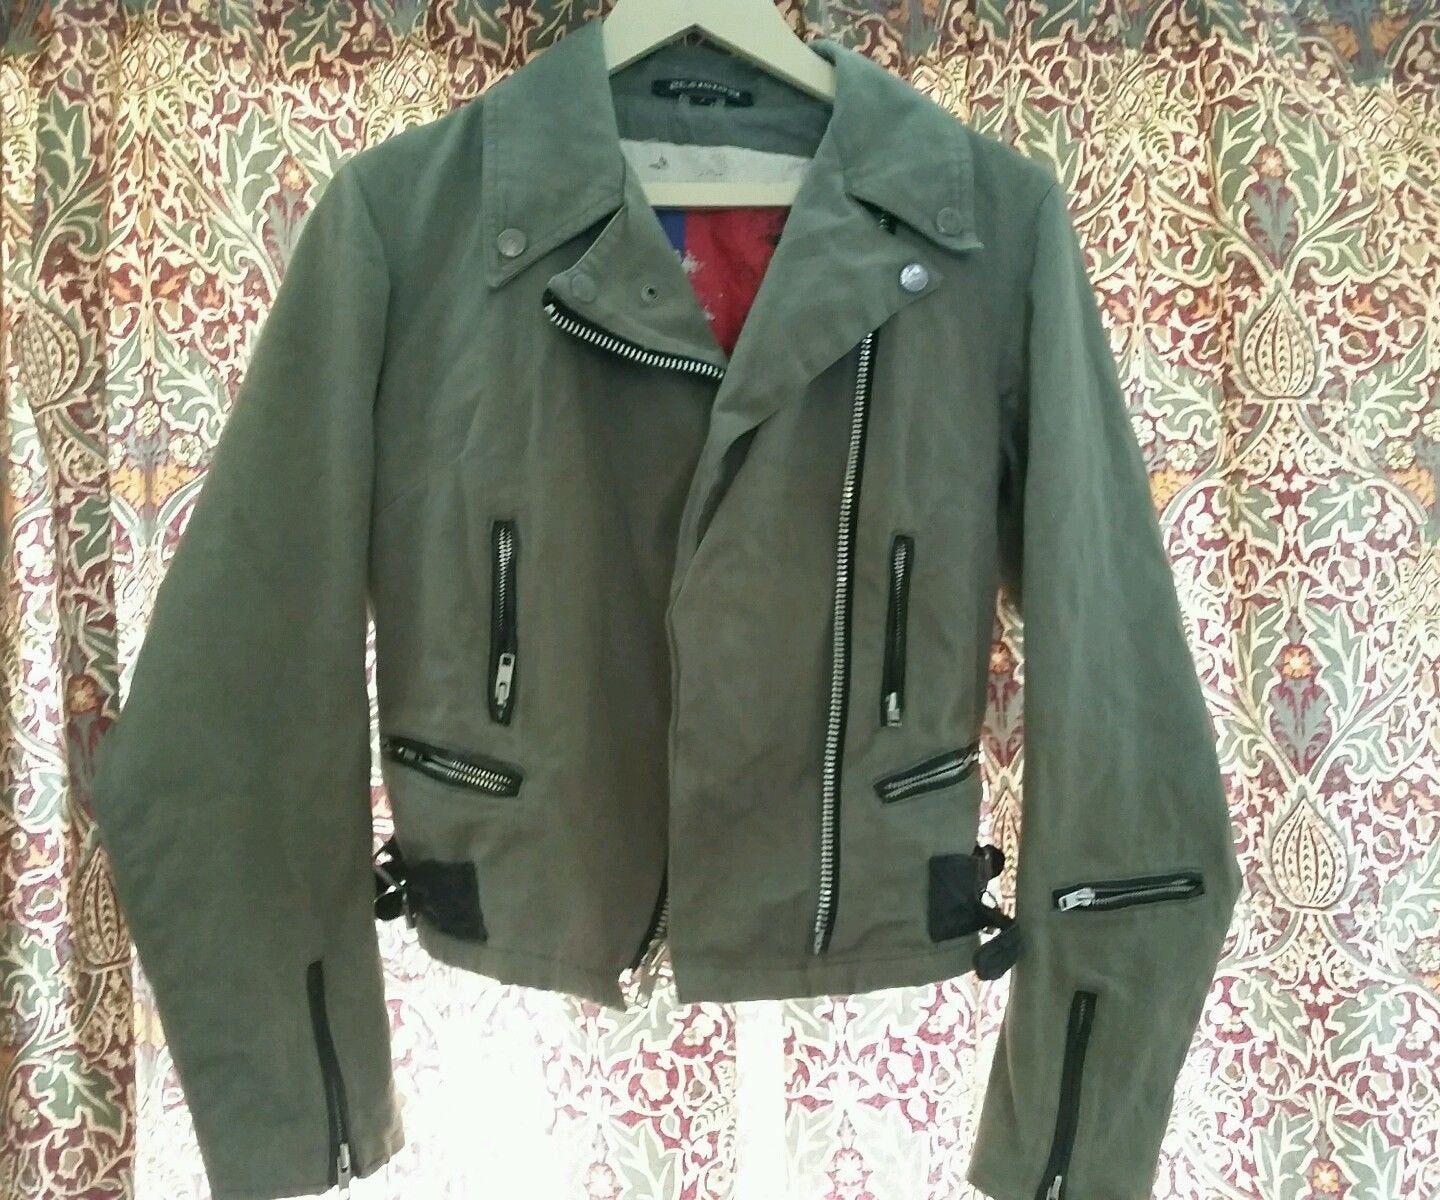 Vintage Religion punk light jacket biker style size 10 appprox.punk as f**.designs inside also. Wonkey Donkey Bazaar